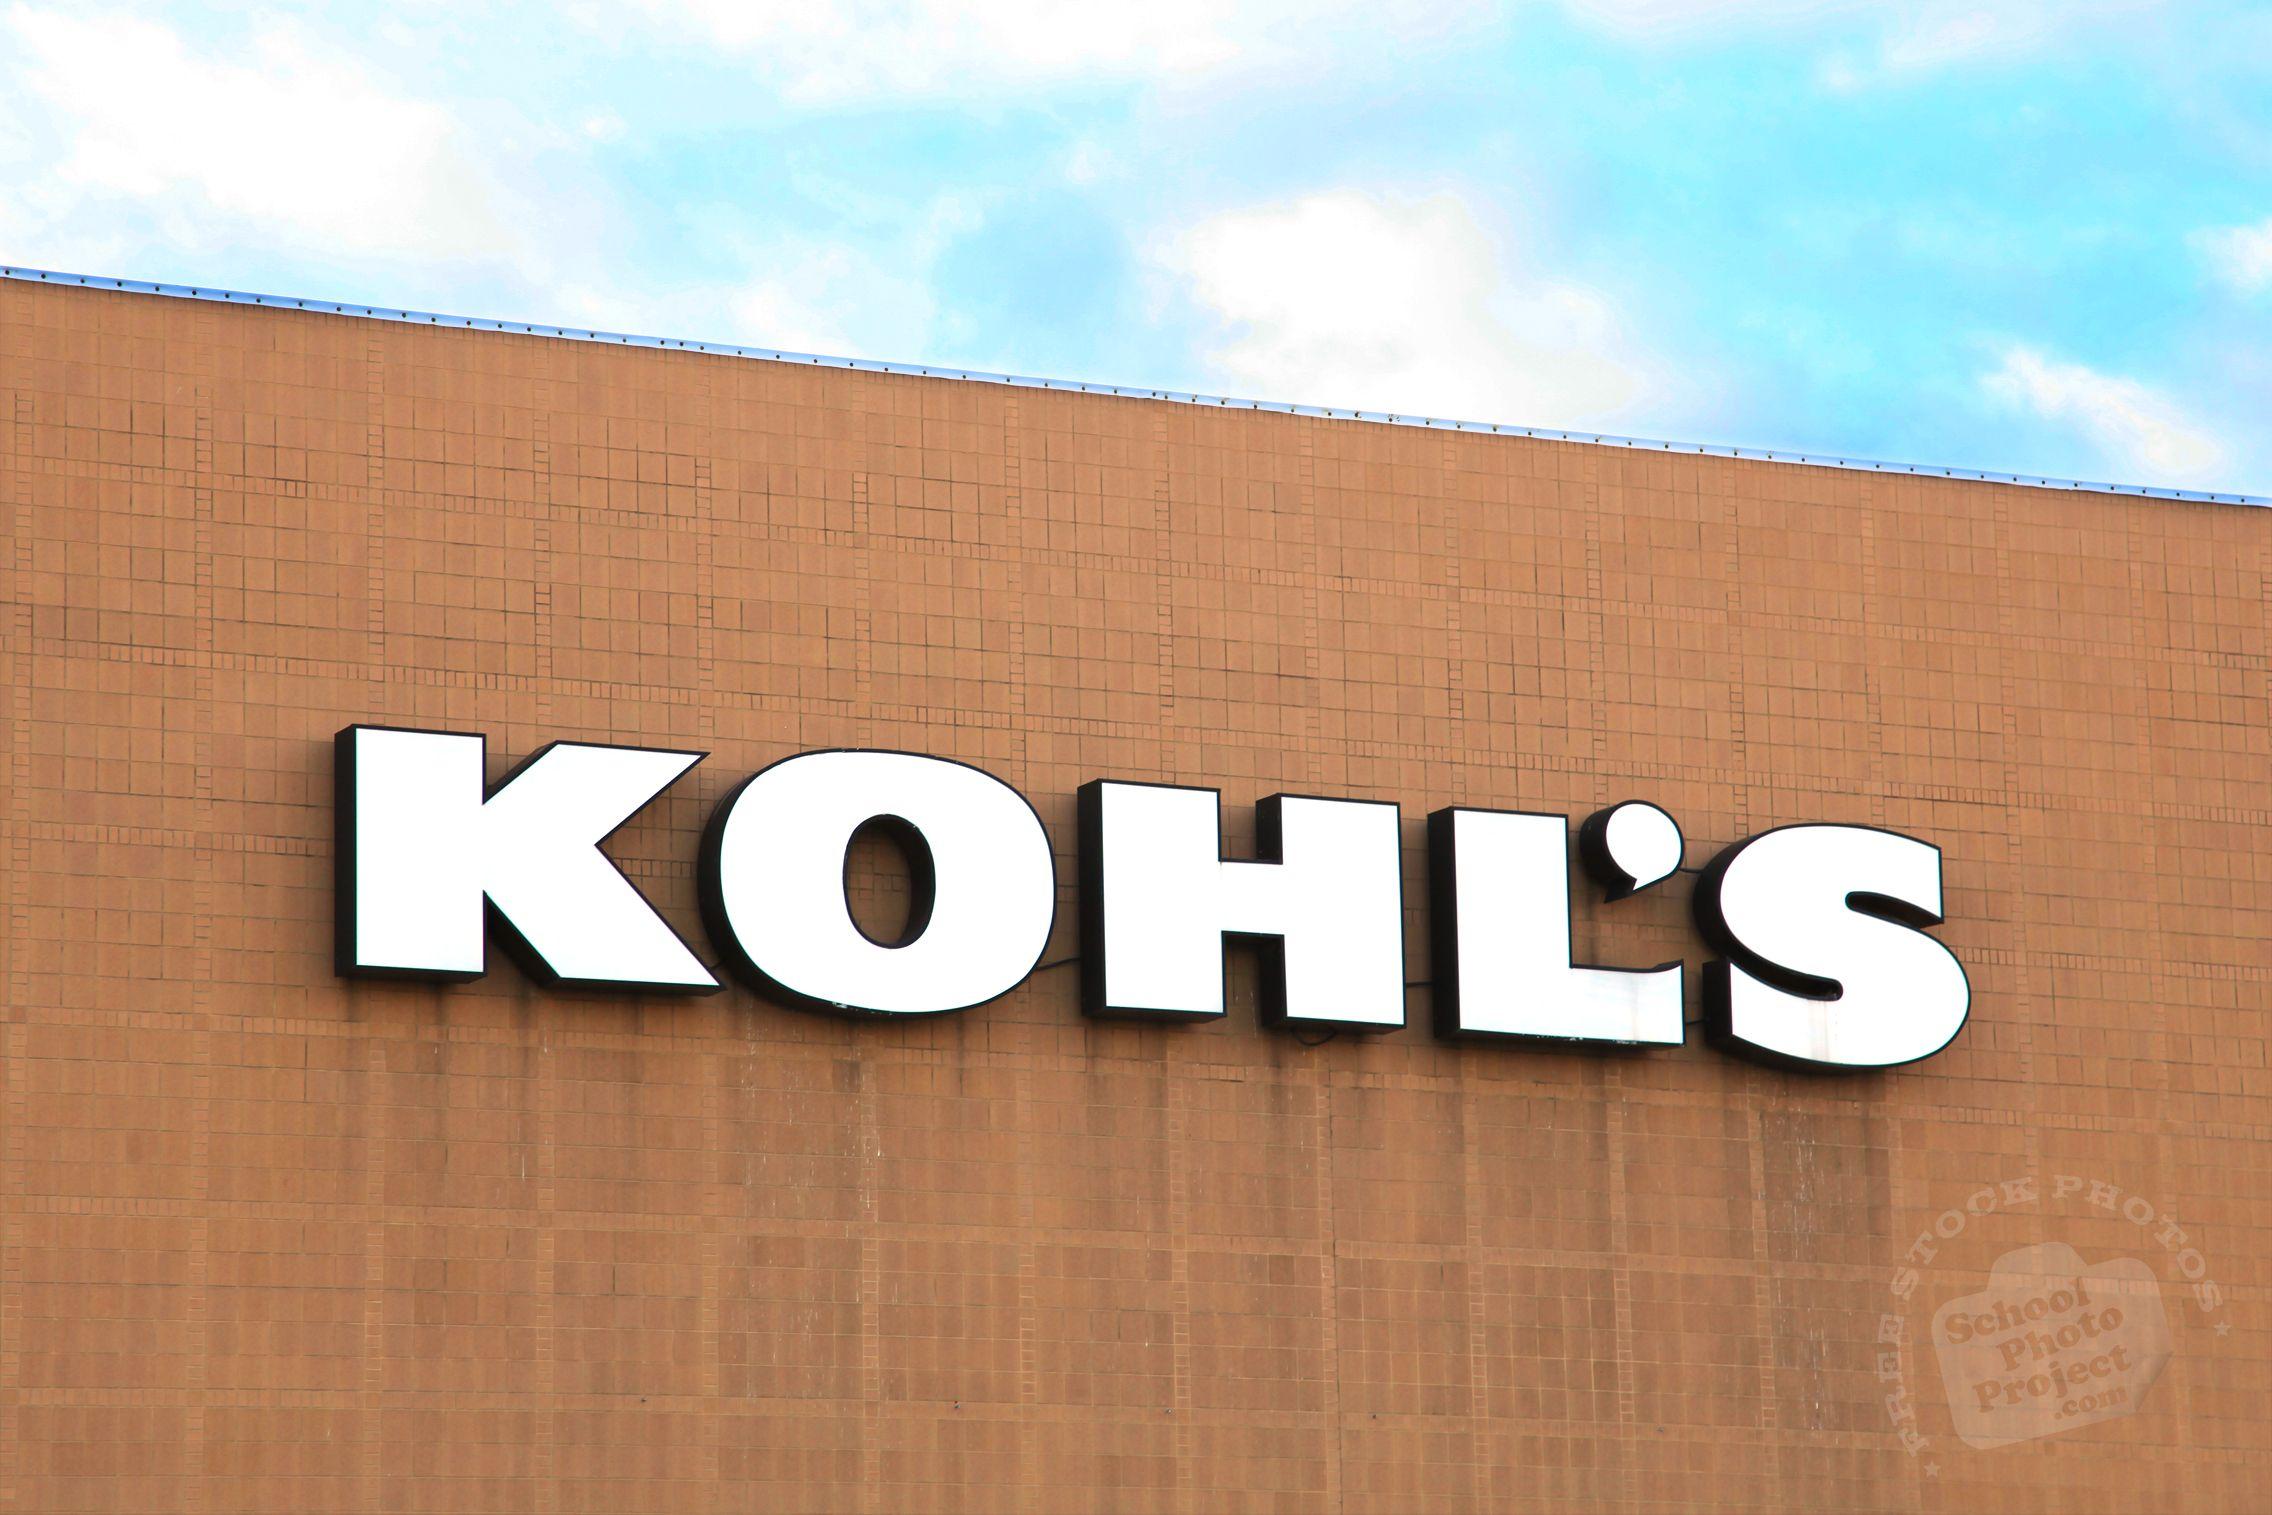 Popular Retail Store Logo - FREE KOHL'S Logo, KOHL'S Identity, Popular Company's Brand Images ...